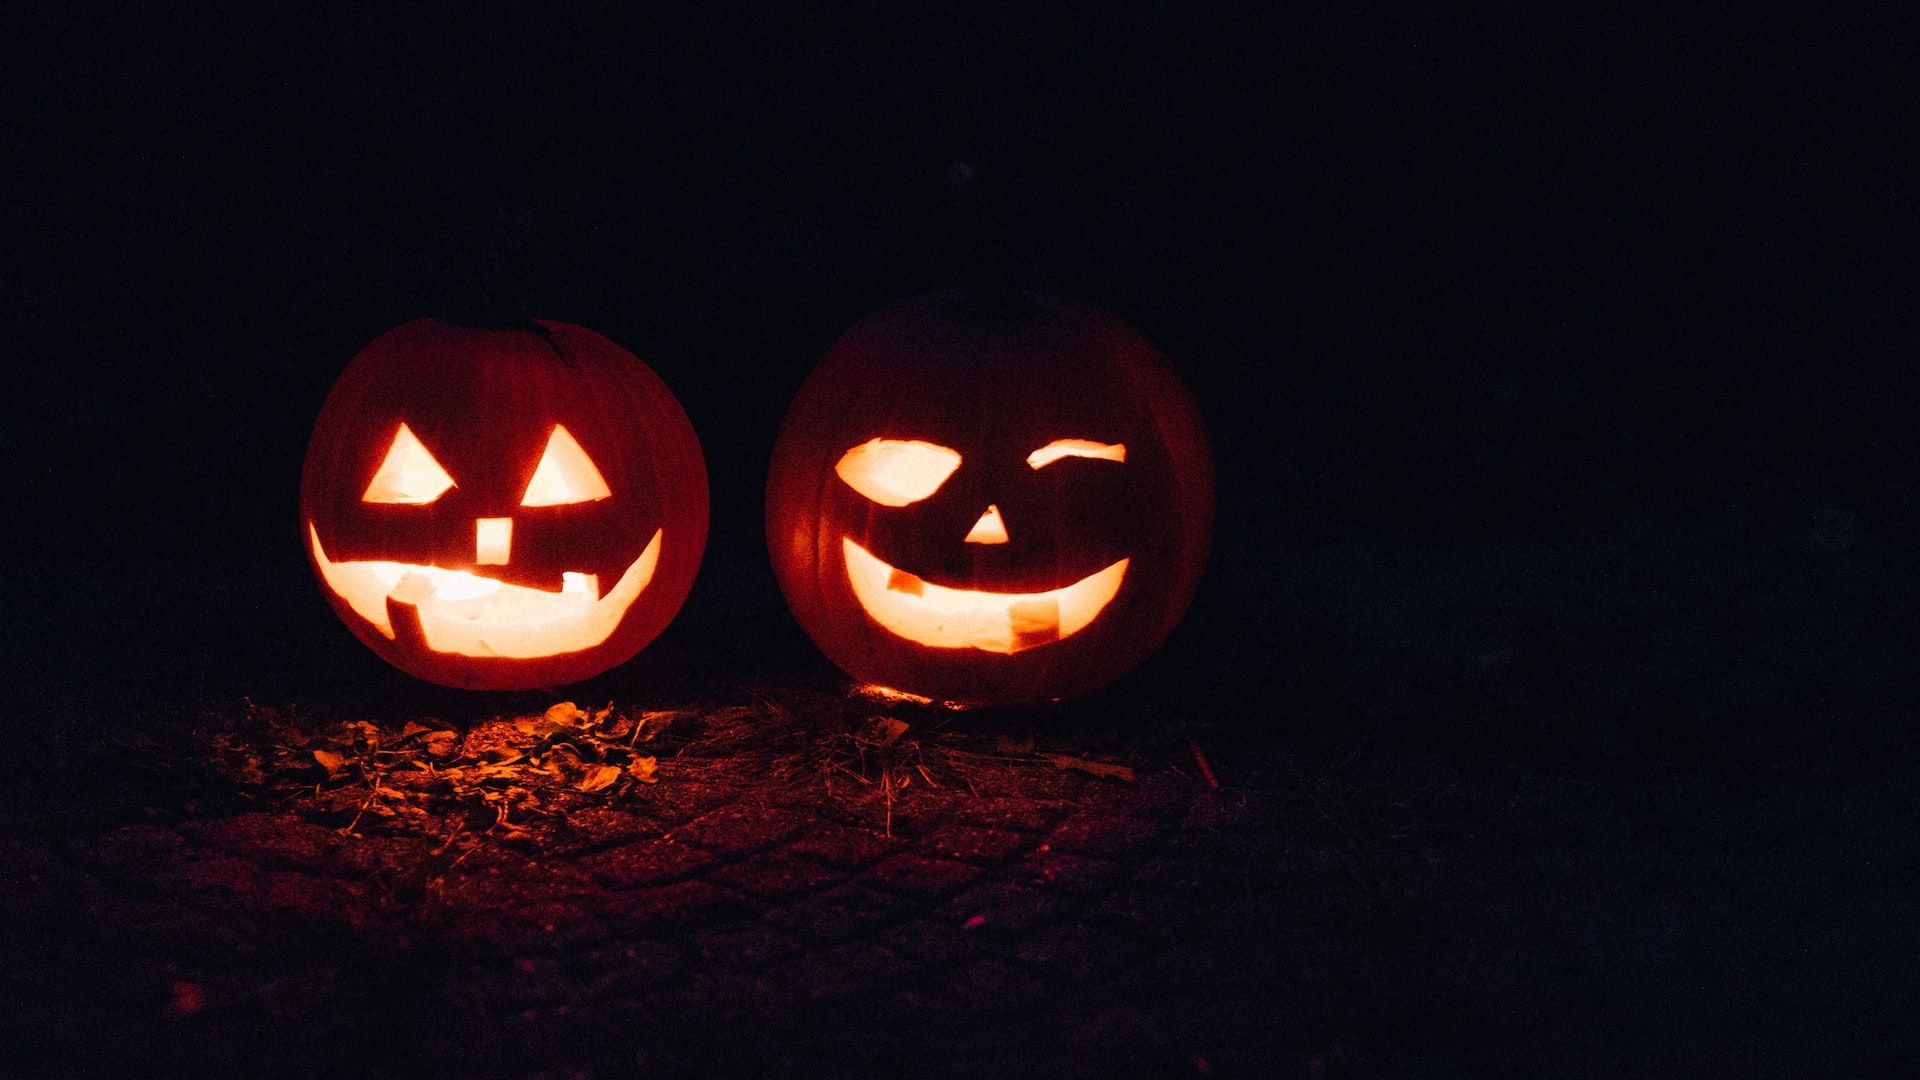 Halloween pumpkin with happy face in the dark by Beth Teutschmann from unsplash